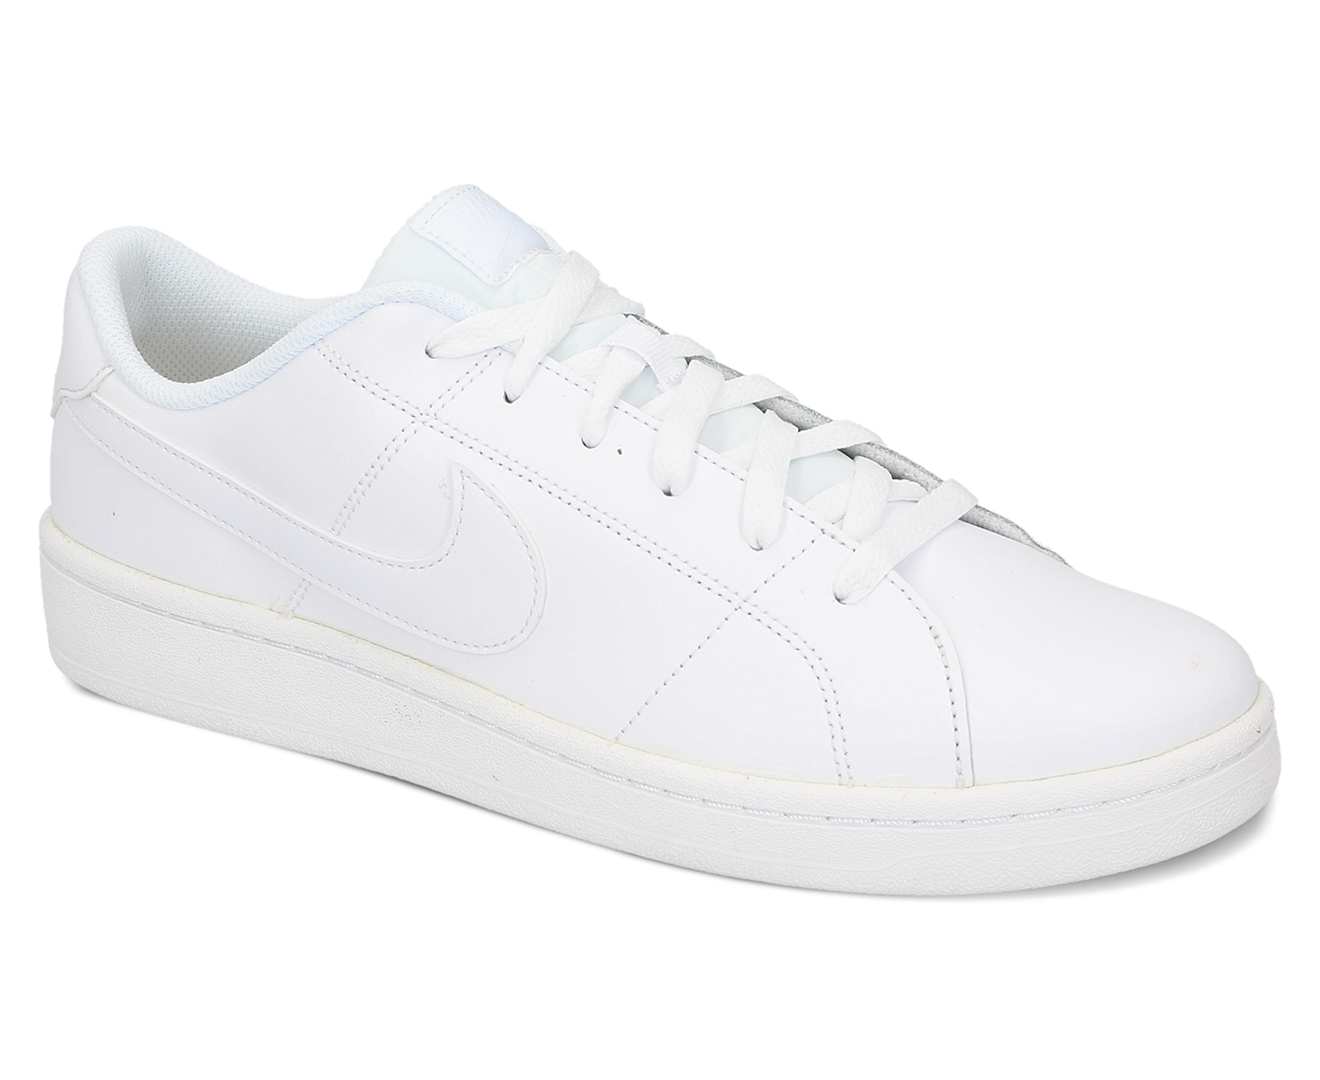 Nike Men #39 s Court Royale 2 Sneakers White Catch com au